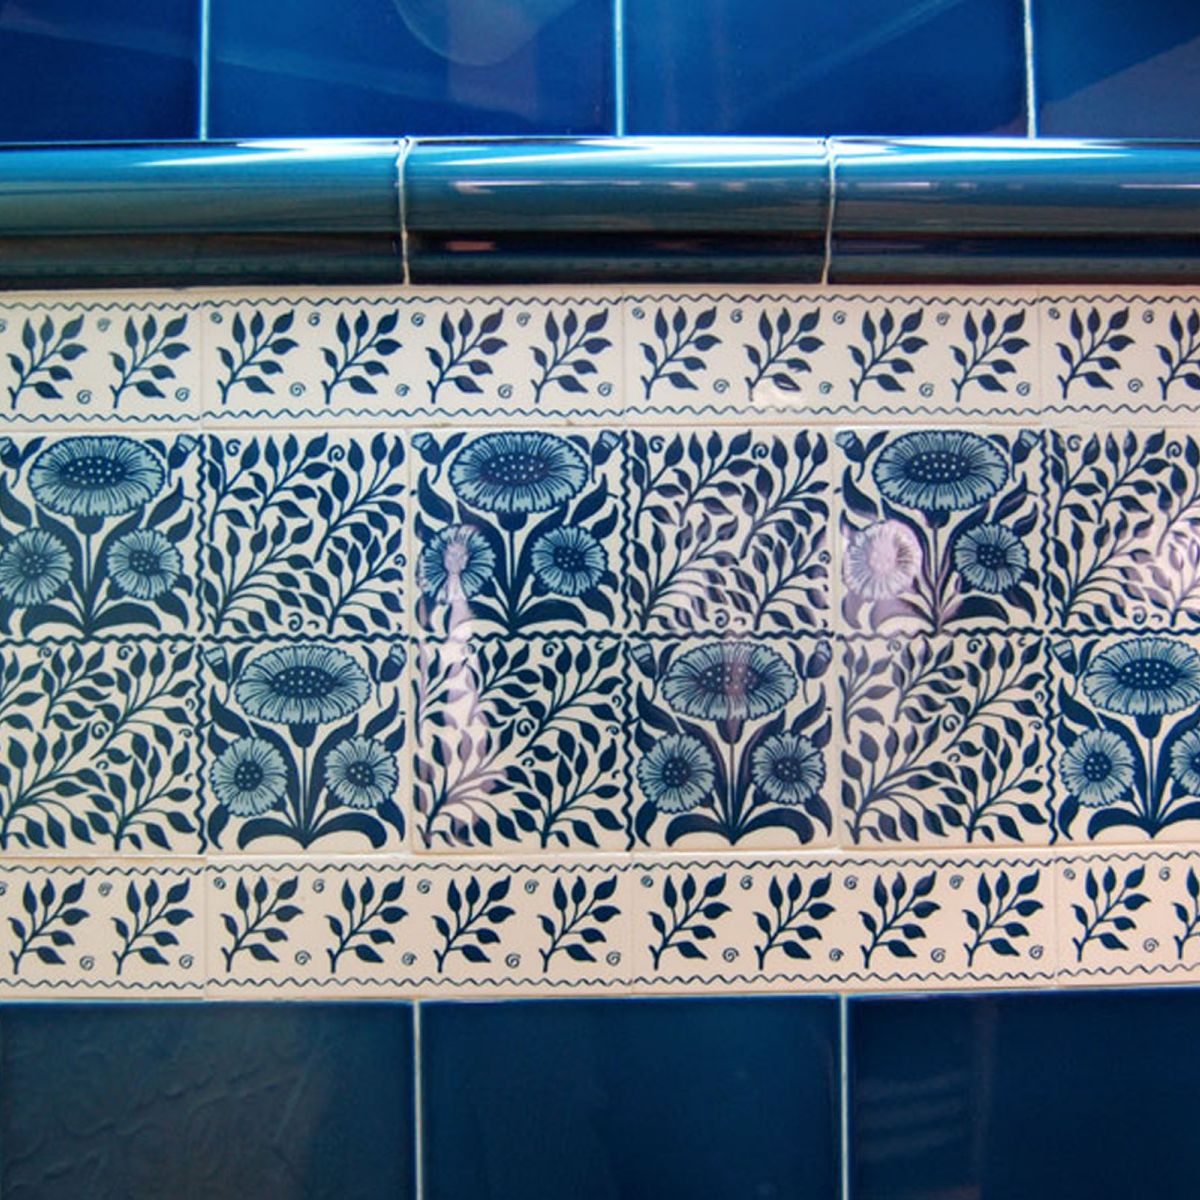 Demo Victorian Oreton blue Classic Printed decorative tiles 152x152mm - exterior use